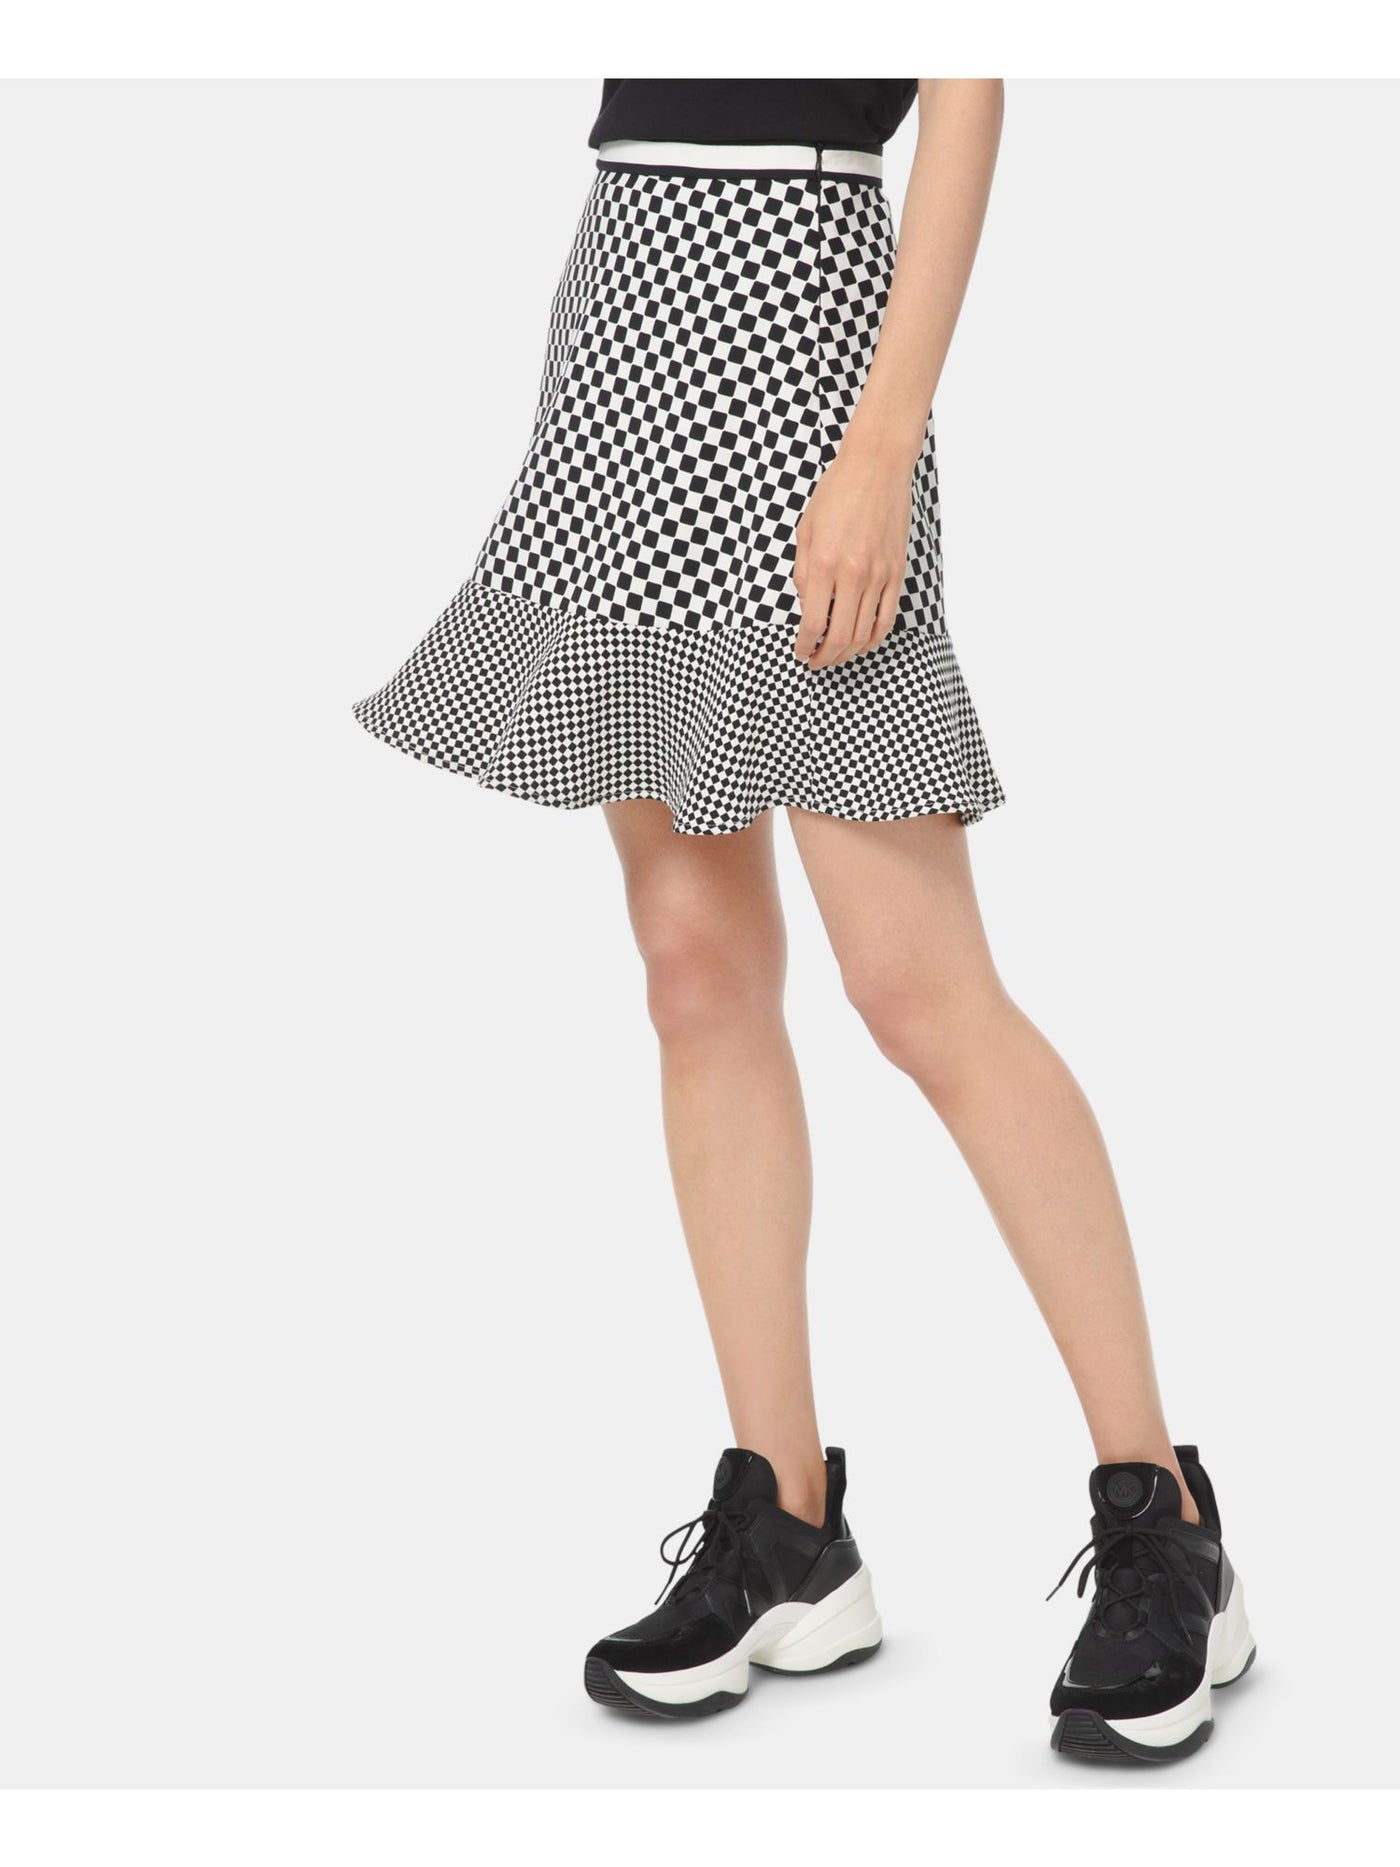 MICHAEL KORS Womens White Check Mini Ruffled Skirt Size: 8